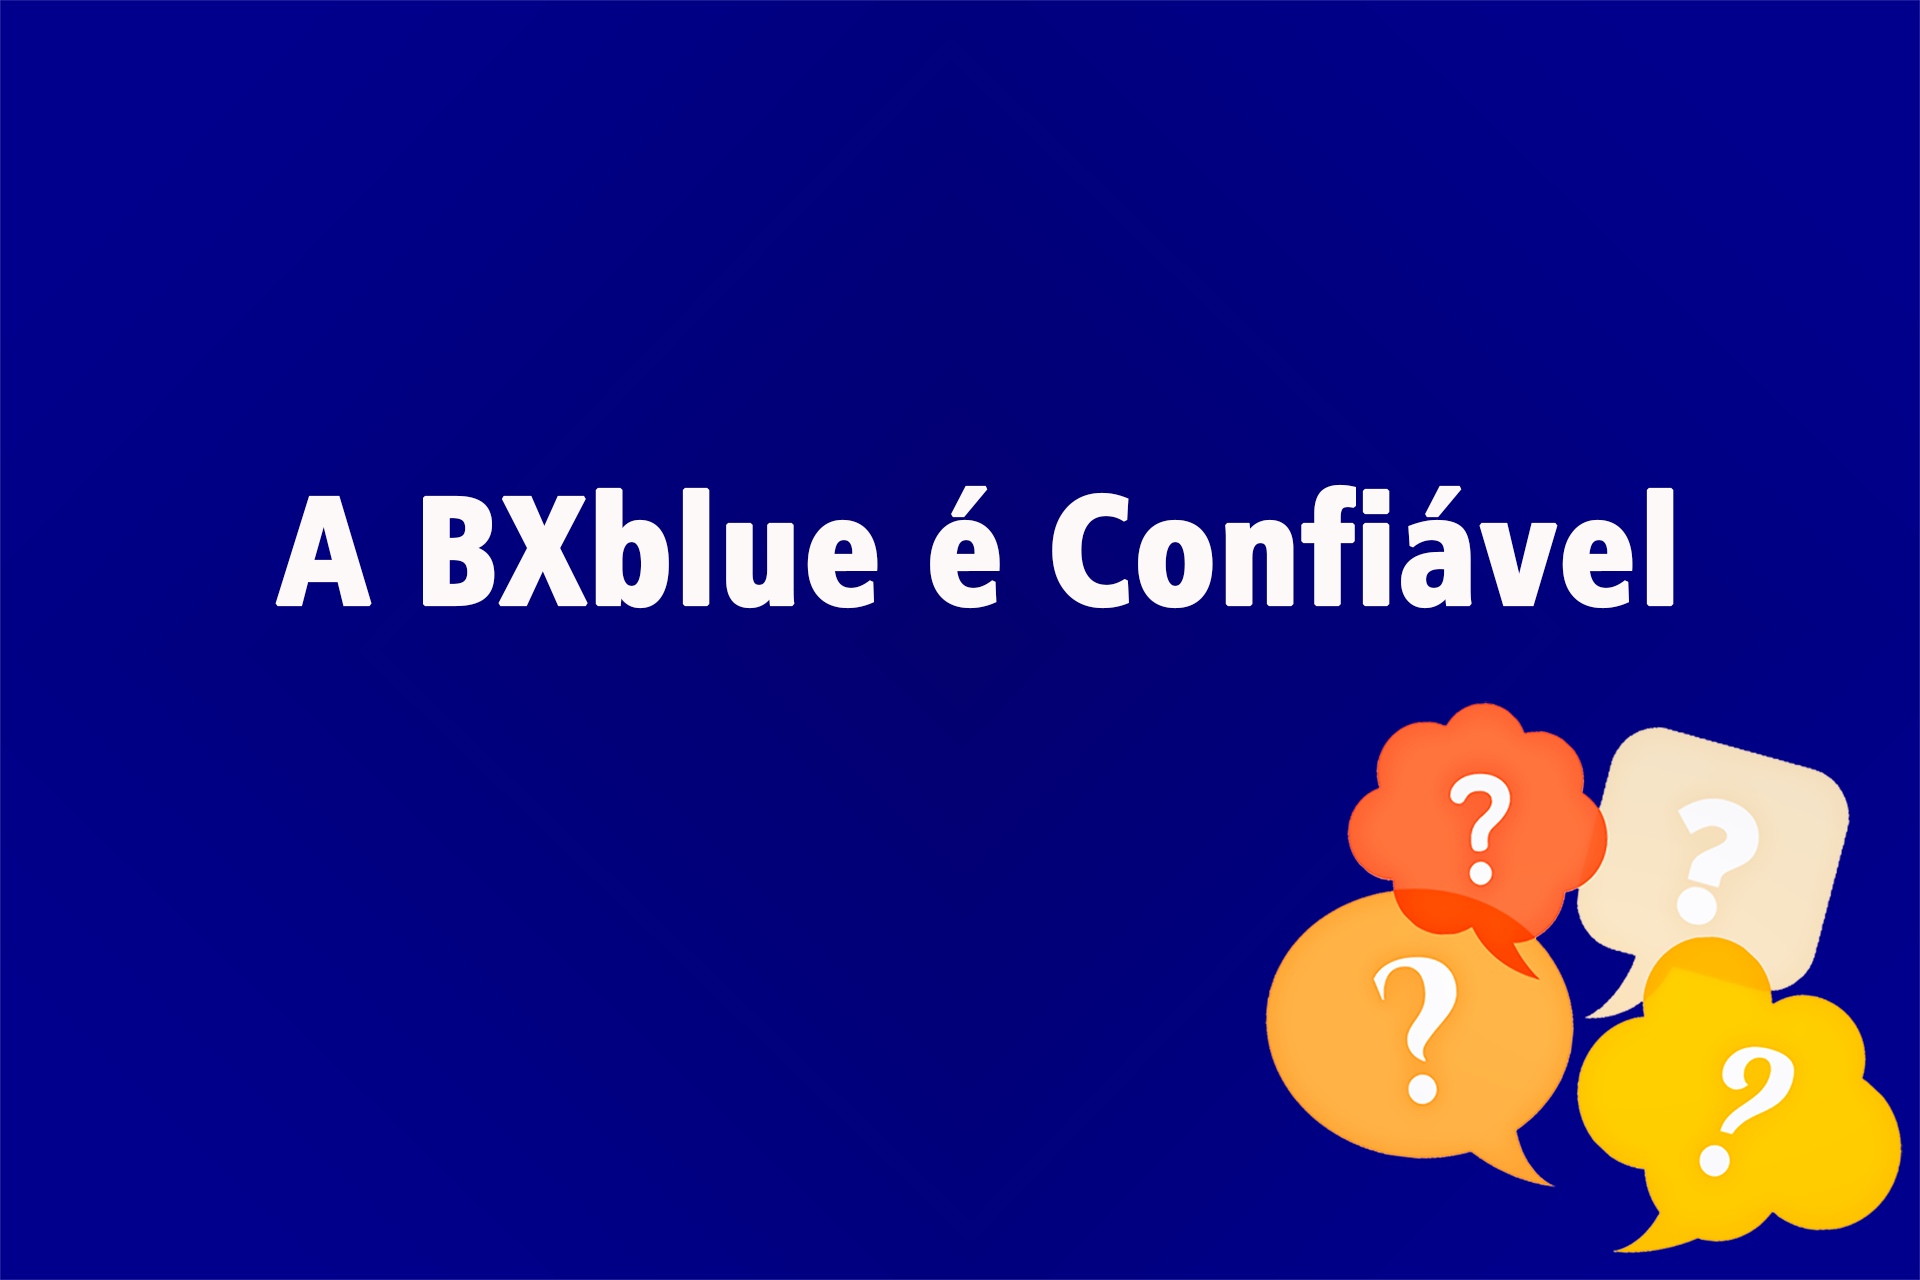 A BXblue é Confiável? Análise Completa da Fintech